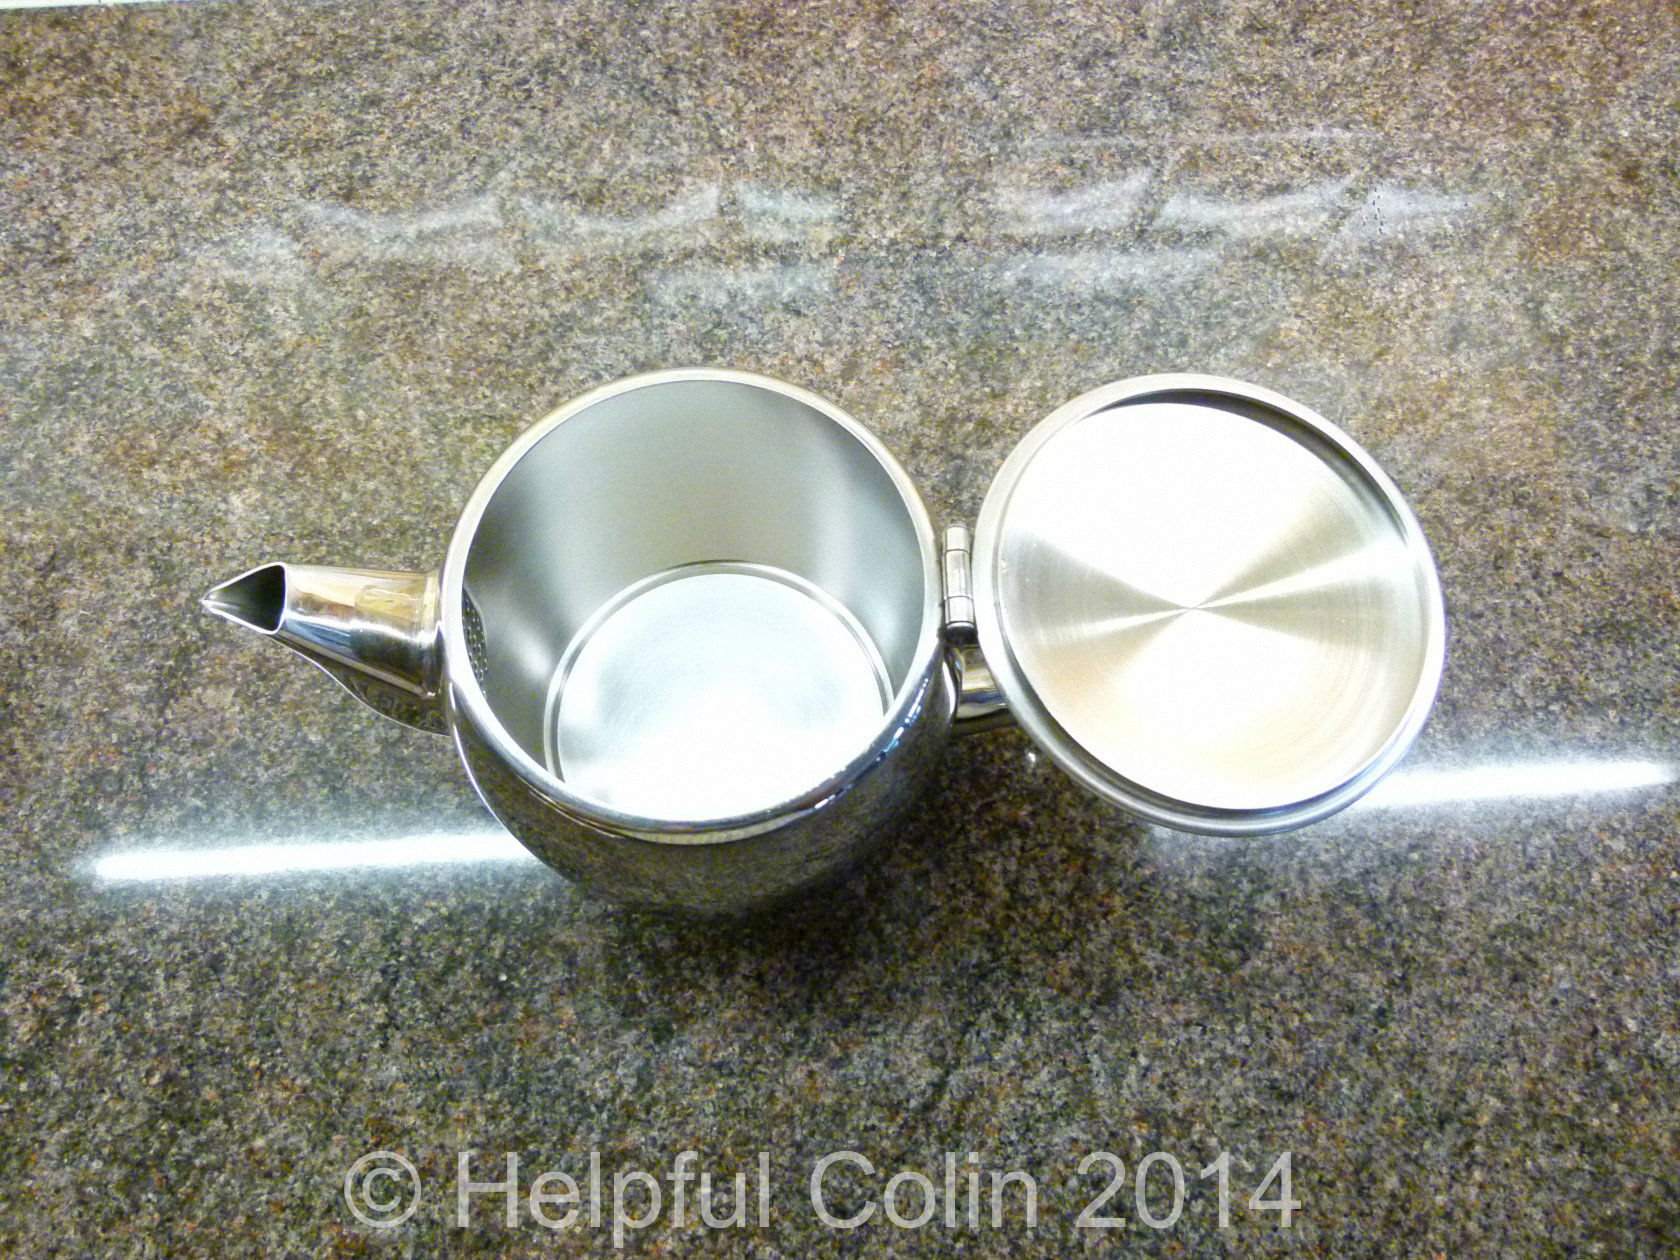 https://helpfulcolin.com/wp-content/uploads/2020/08/Clean-Stainless-Steel-Teapot-%C2%A9.jpg